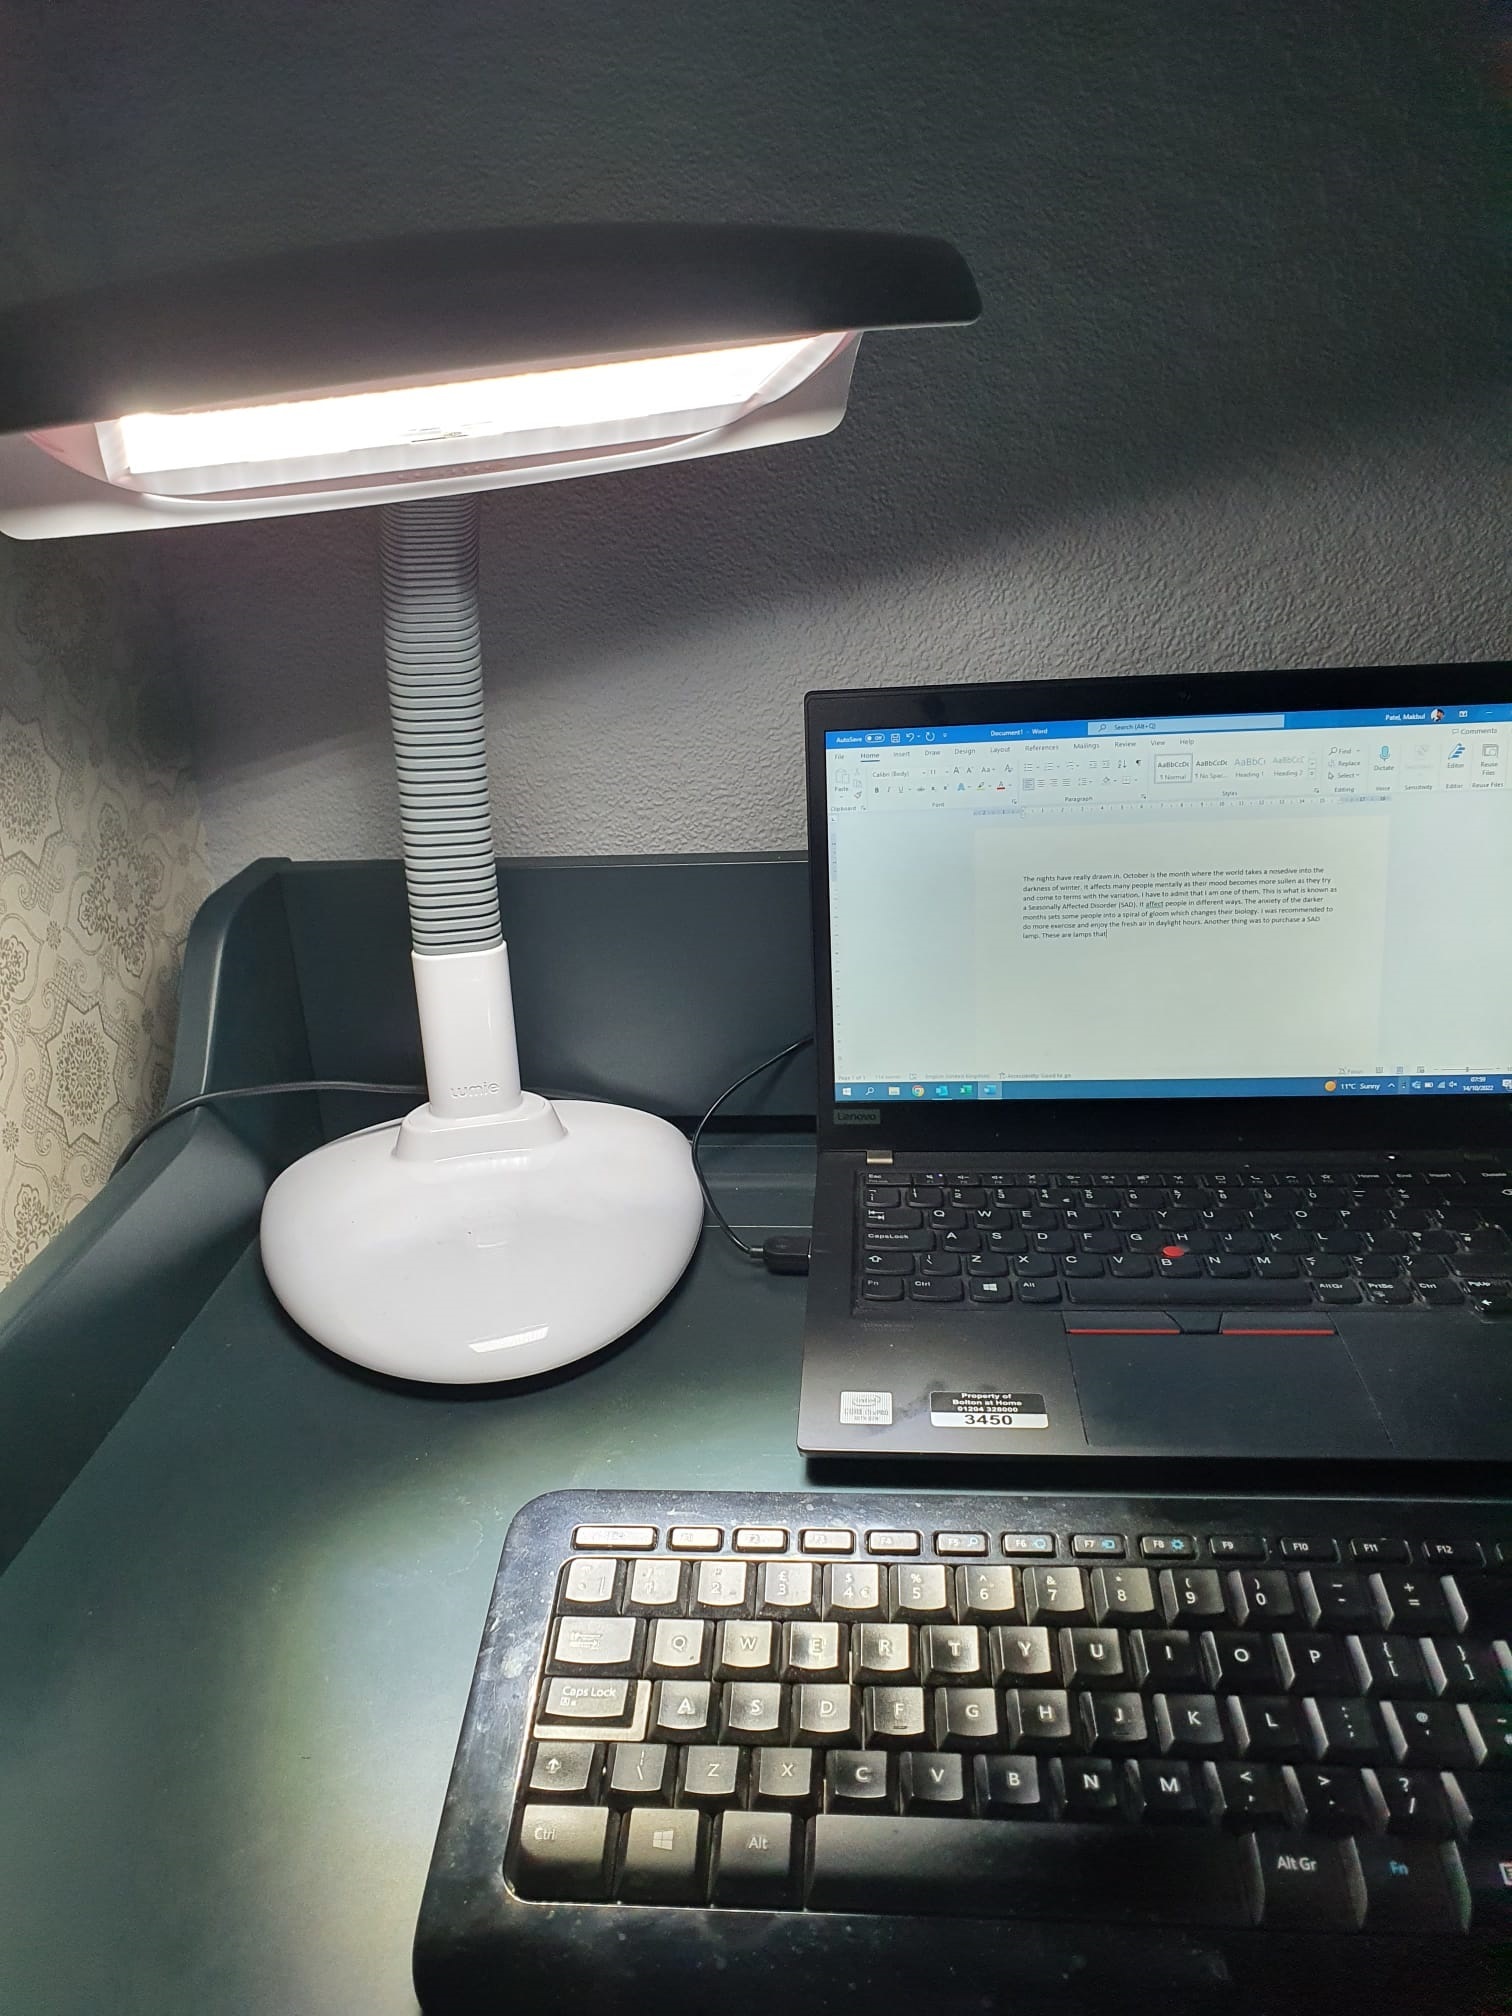 Maks work desk and lamp